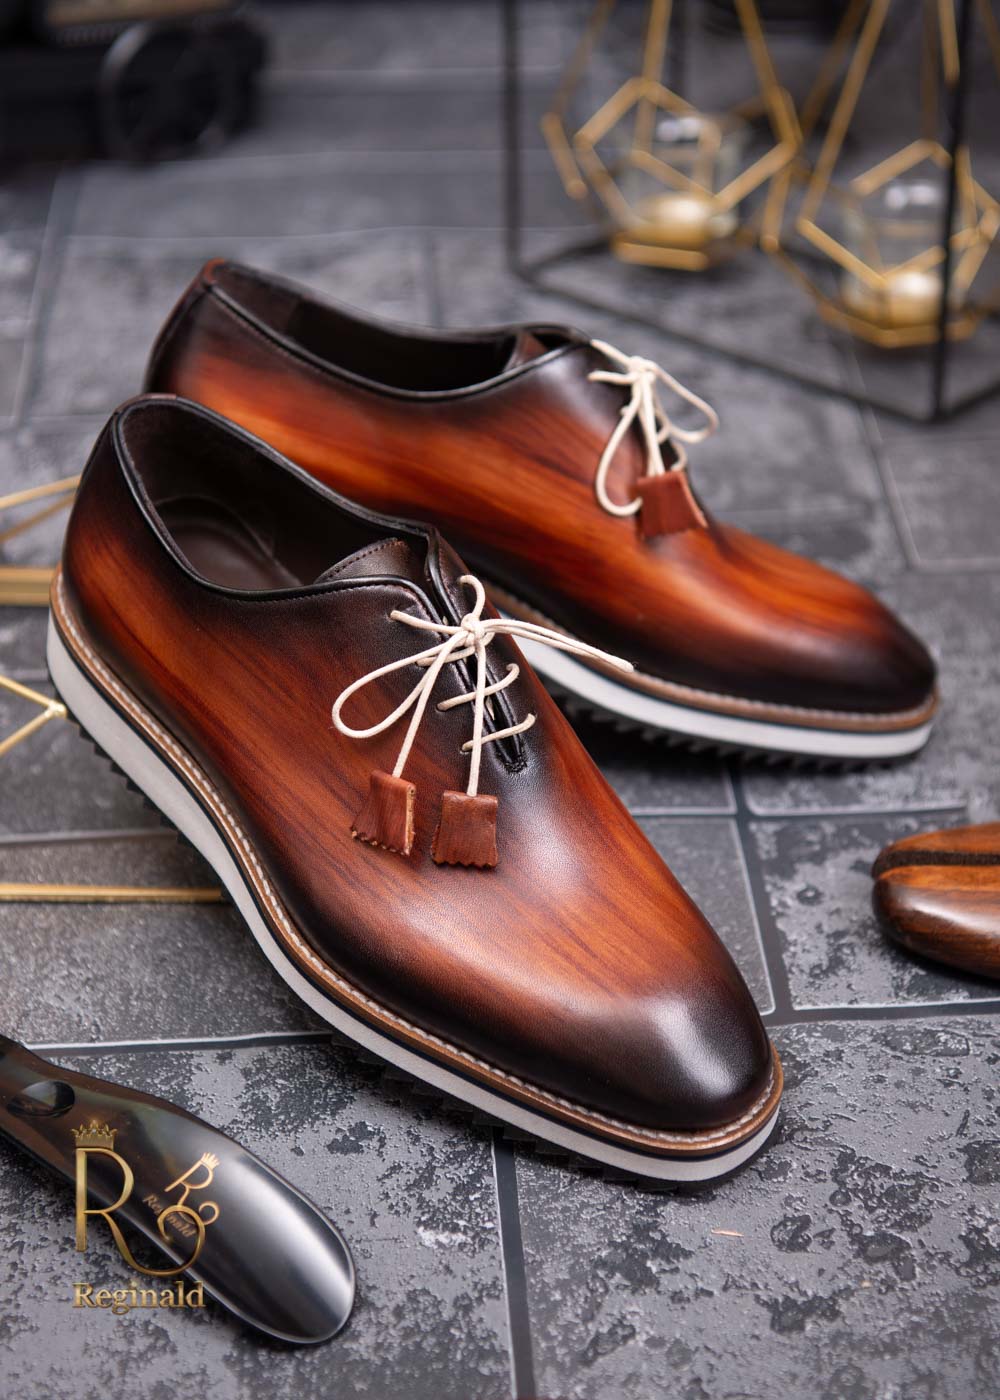 Pantofi Casual de barbati din piele naturala, maro cu talpa inalta – P1327 – Reginald.ro – mare magazin de Costume barbatesti